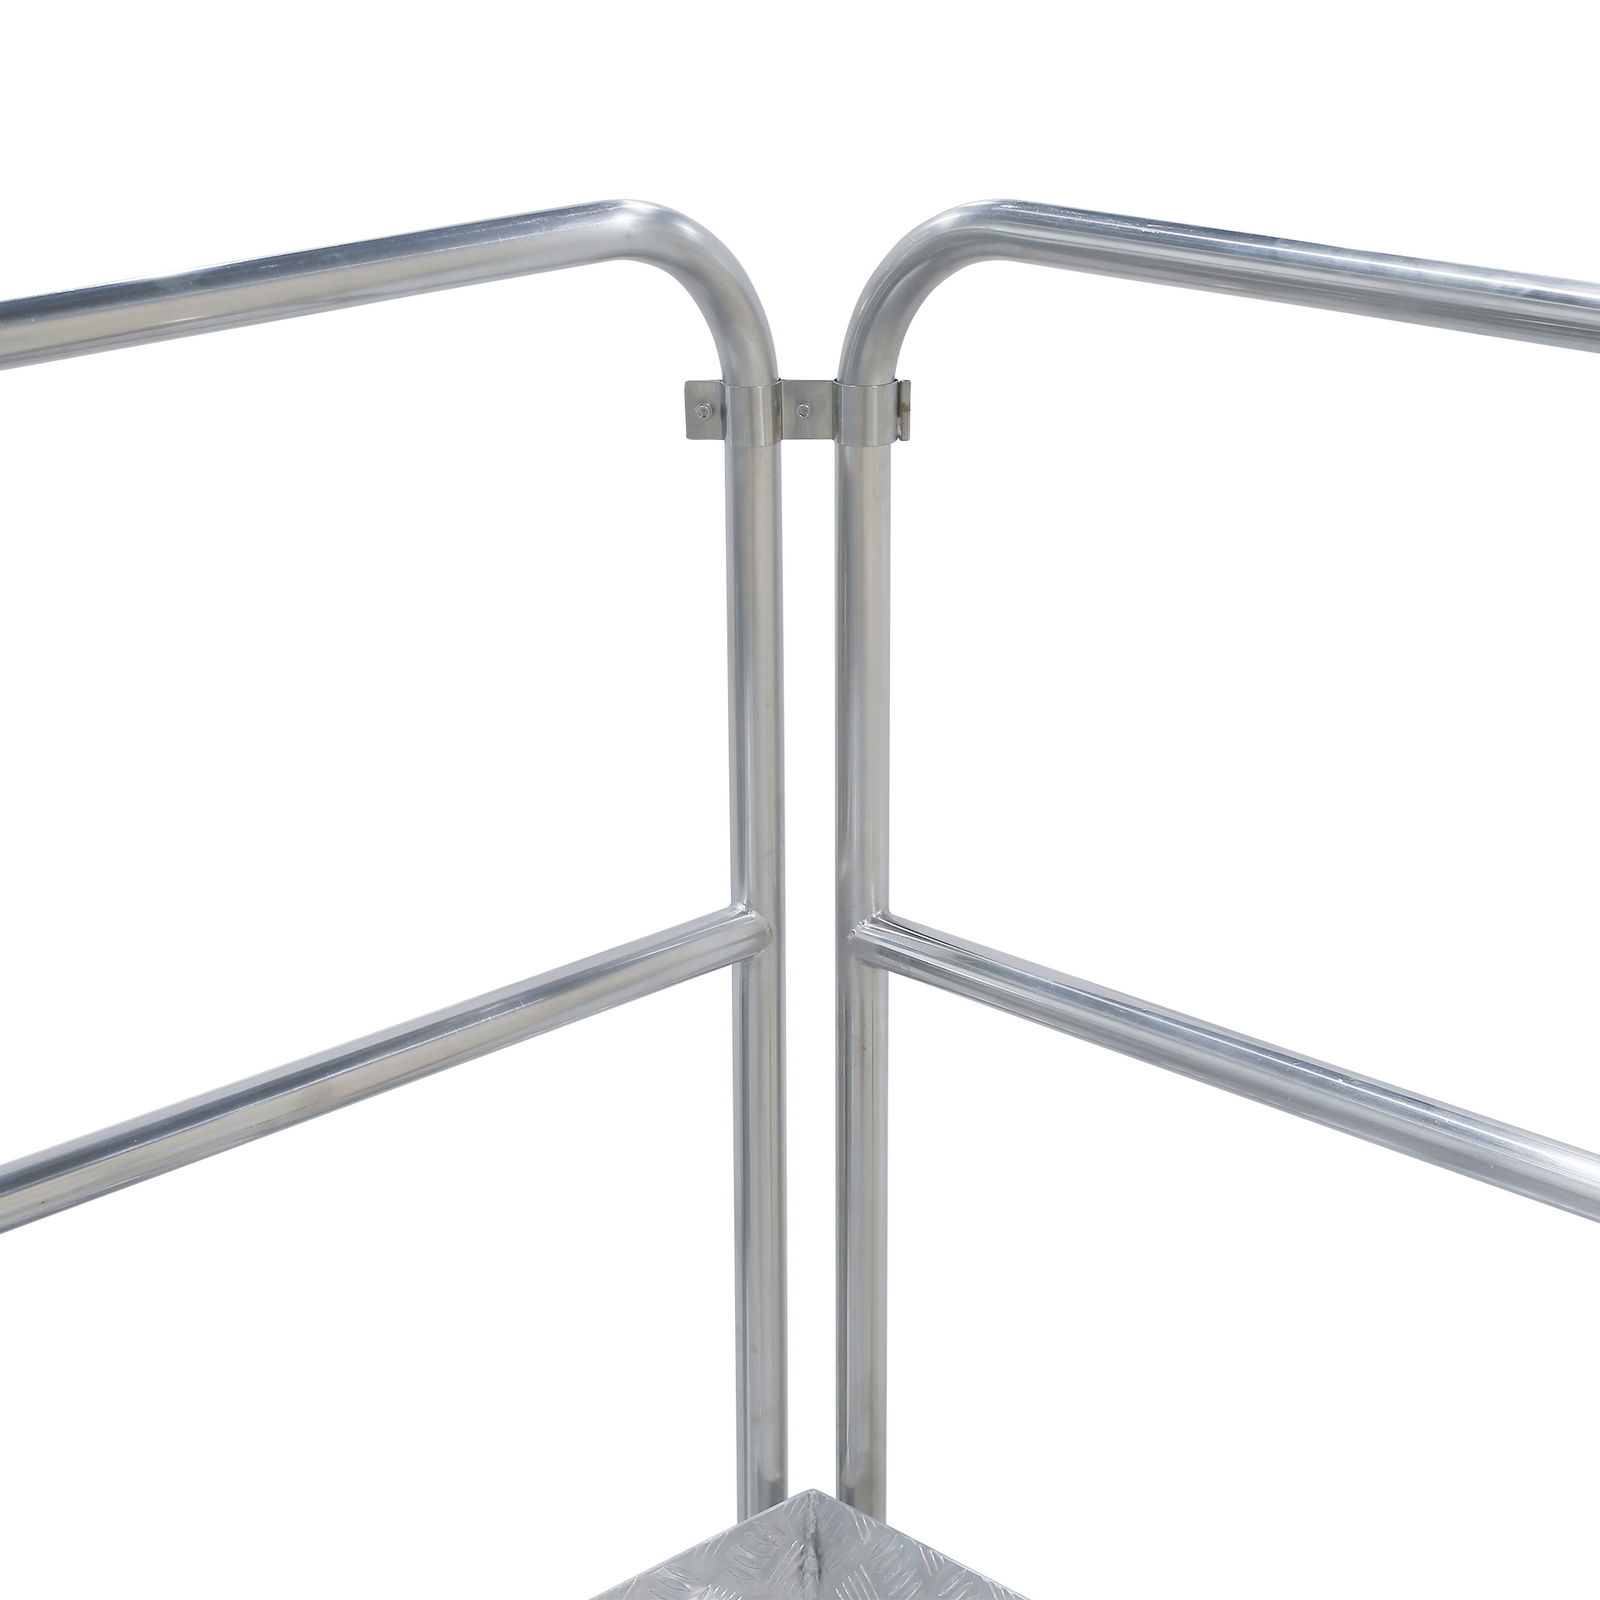 closeup of the handrails of the jorestech stainless steel combination weigher platform